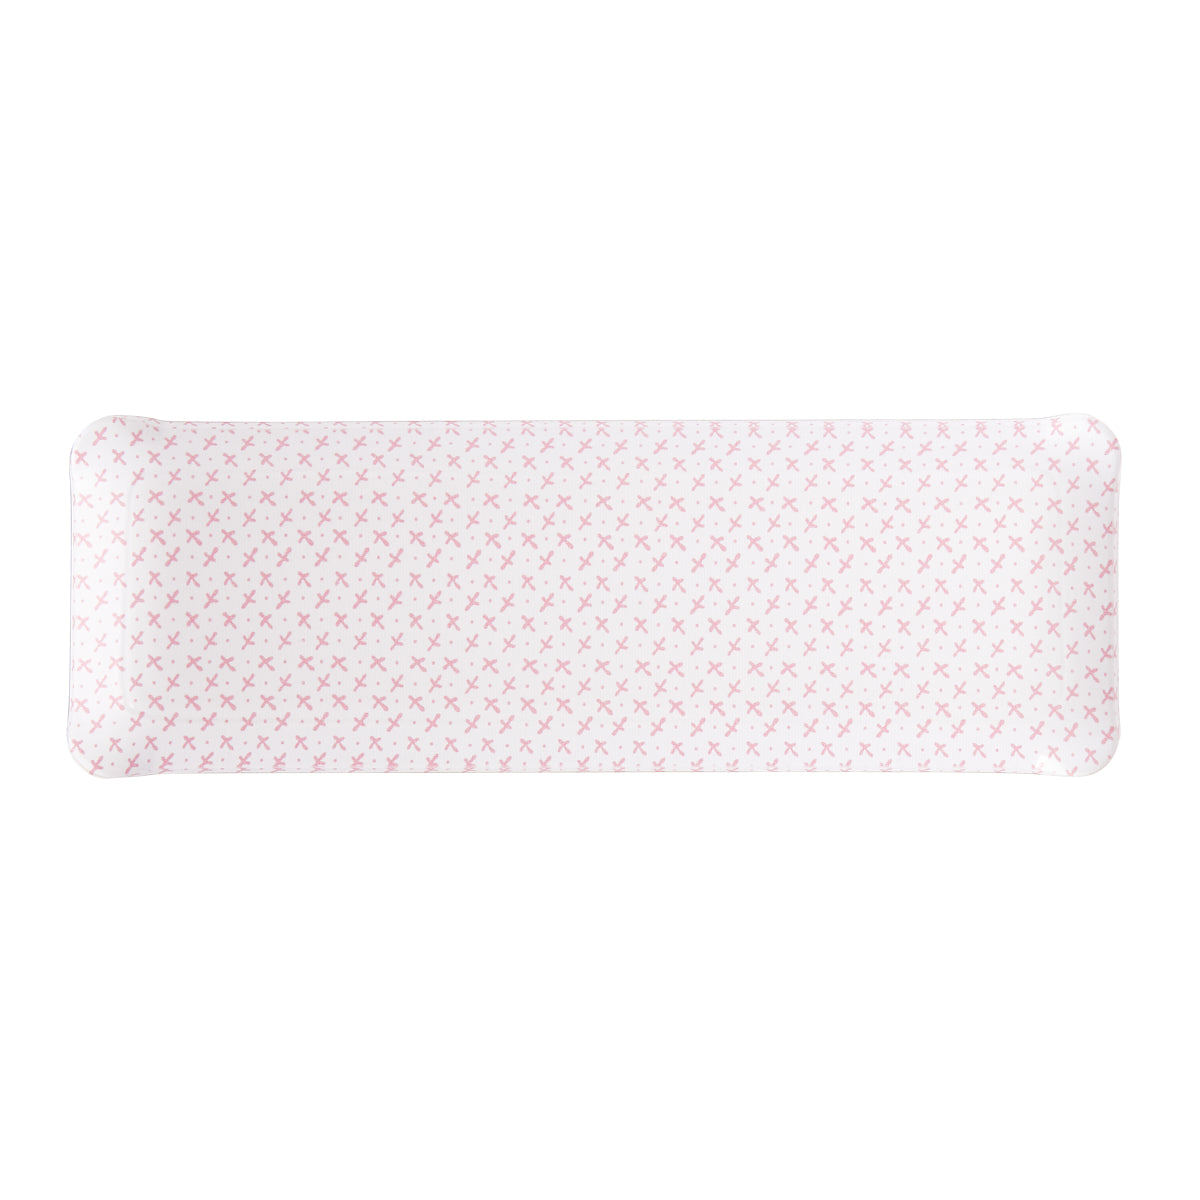 Nina Campbell Fabric Tray Oblong - Sprig Pink